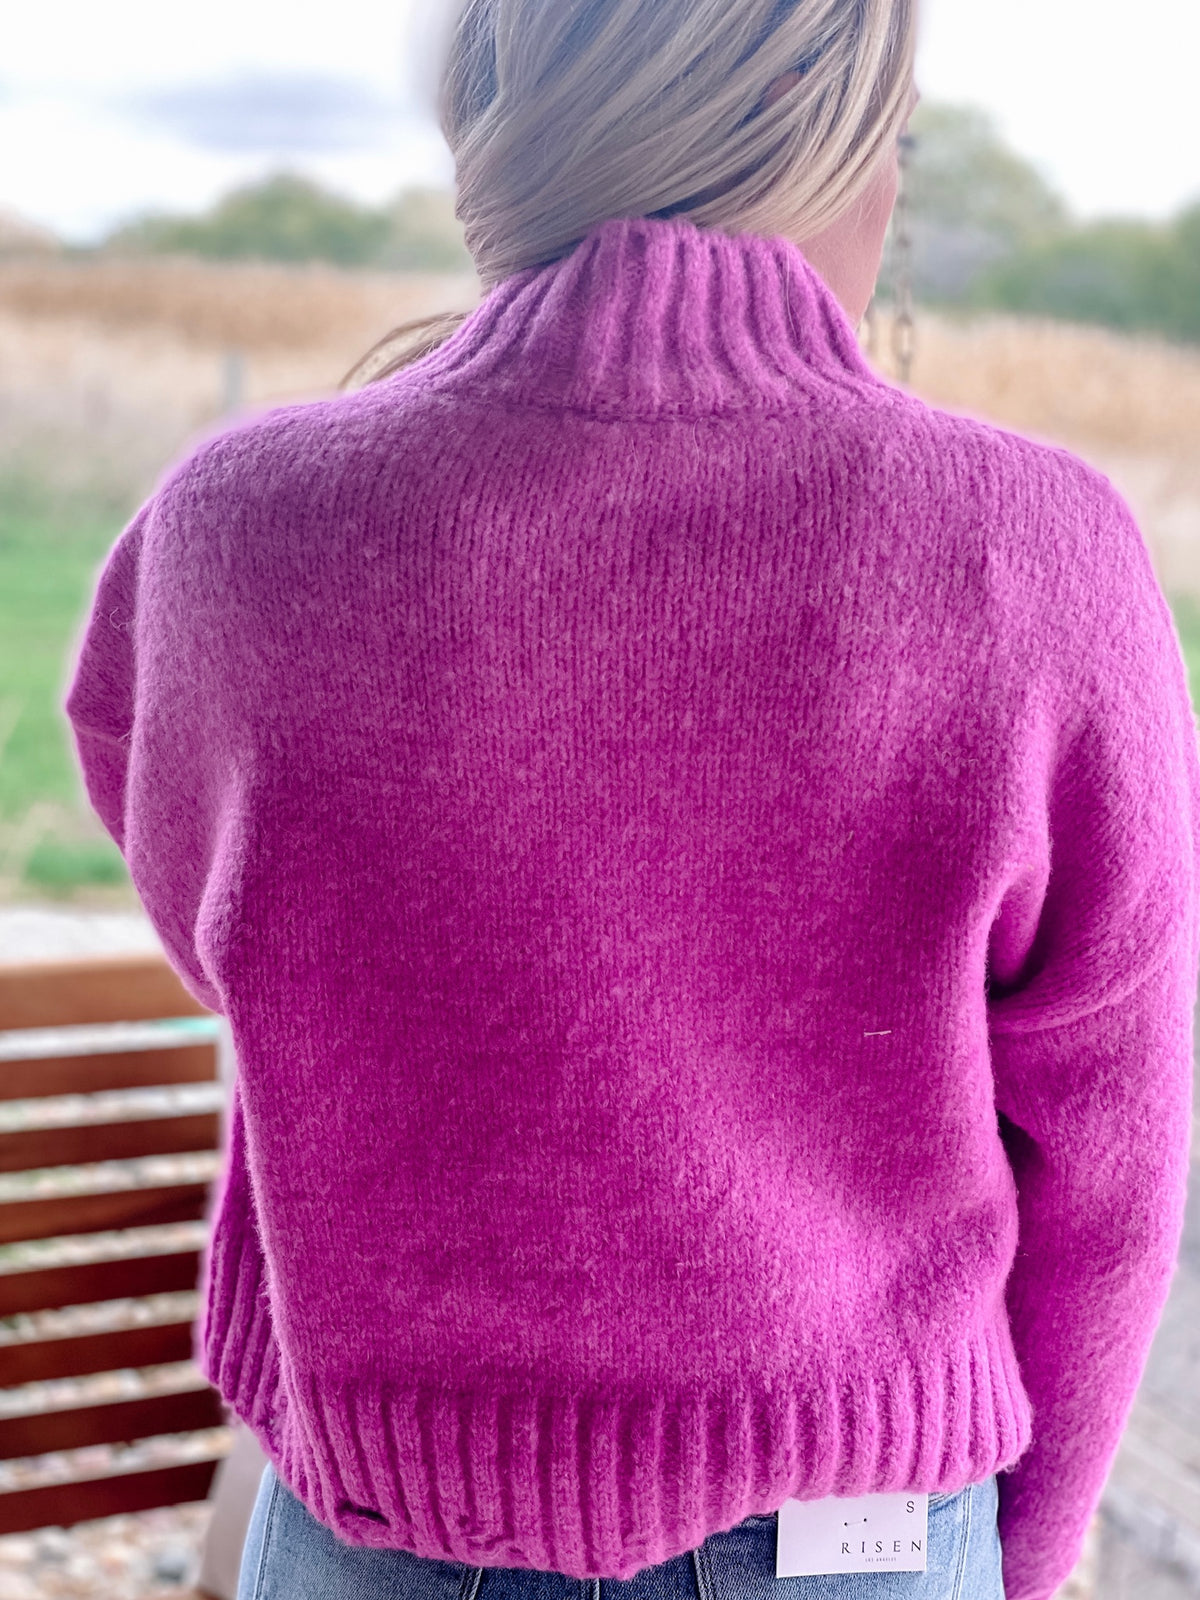 Bright Fuchsia Sweater With Distressed Hem